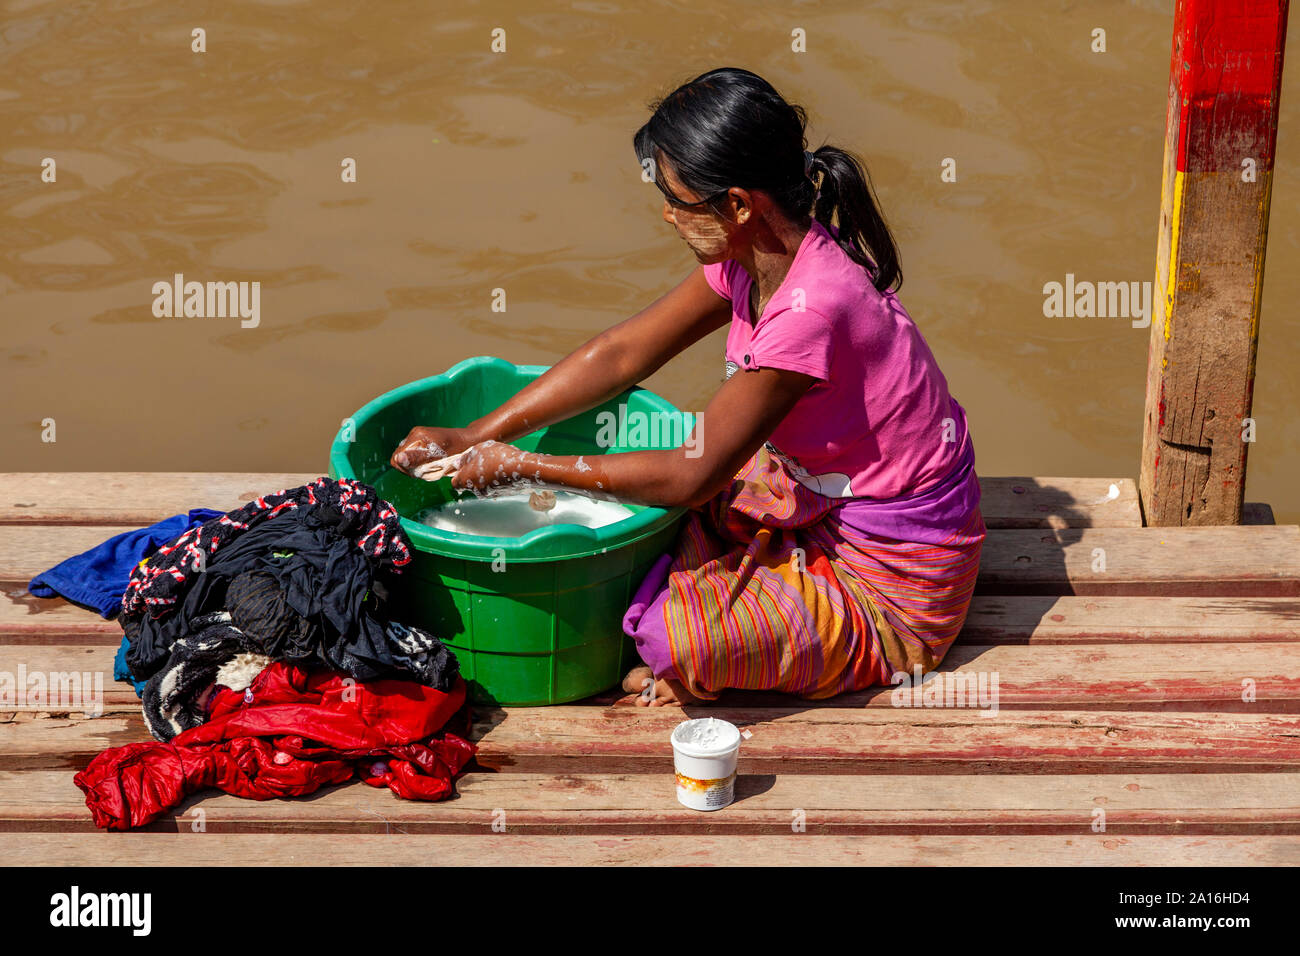 https://c8.alamy.com/comp/2A16HD4/a-local-woman-washing-clothes-lake-inle-shan-state-myanmar-2A16HD4.jpg